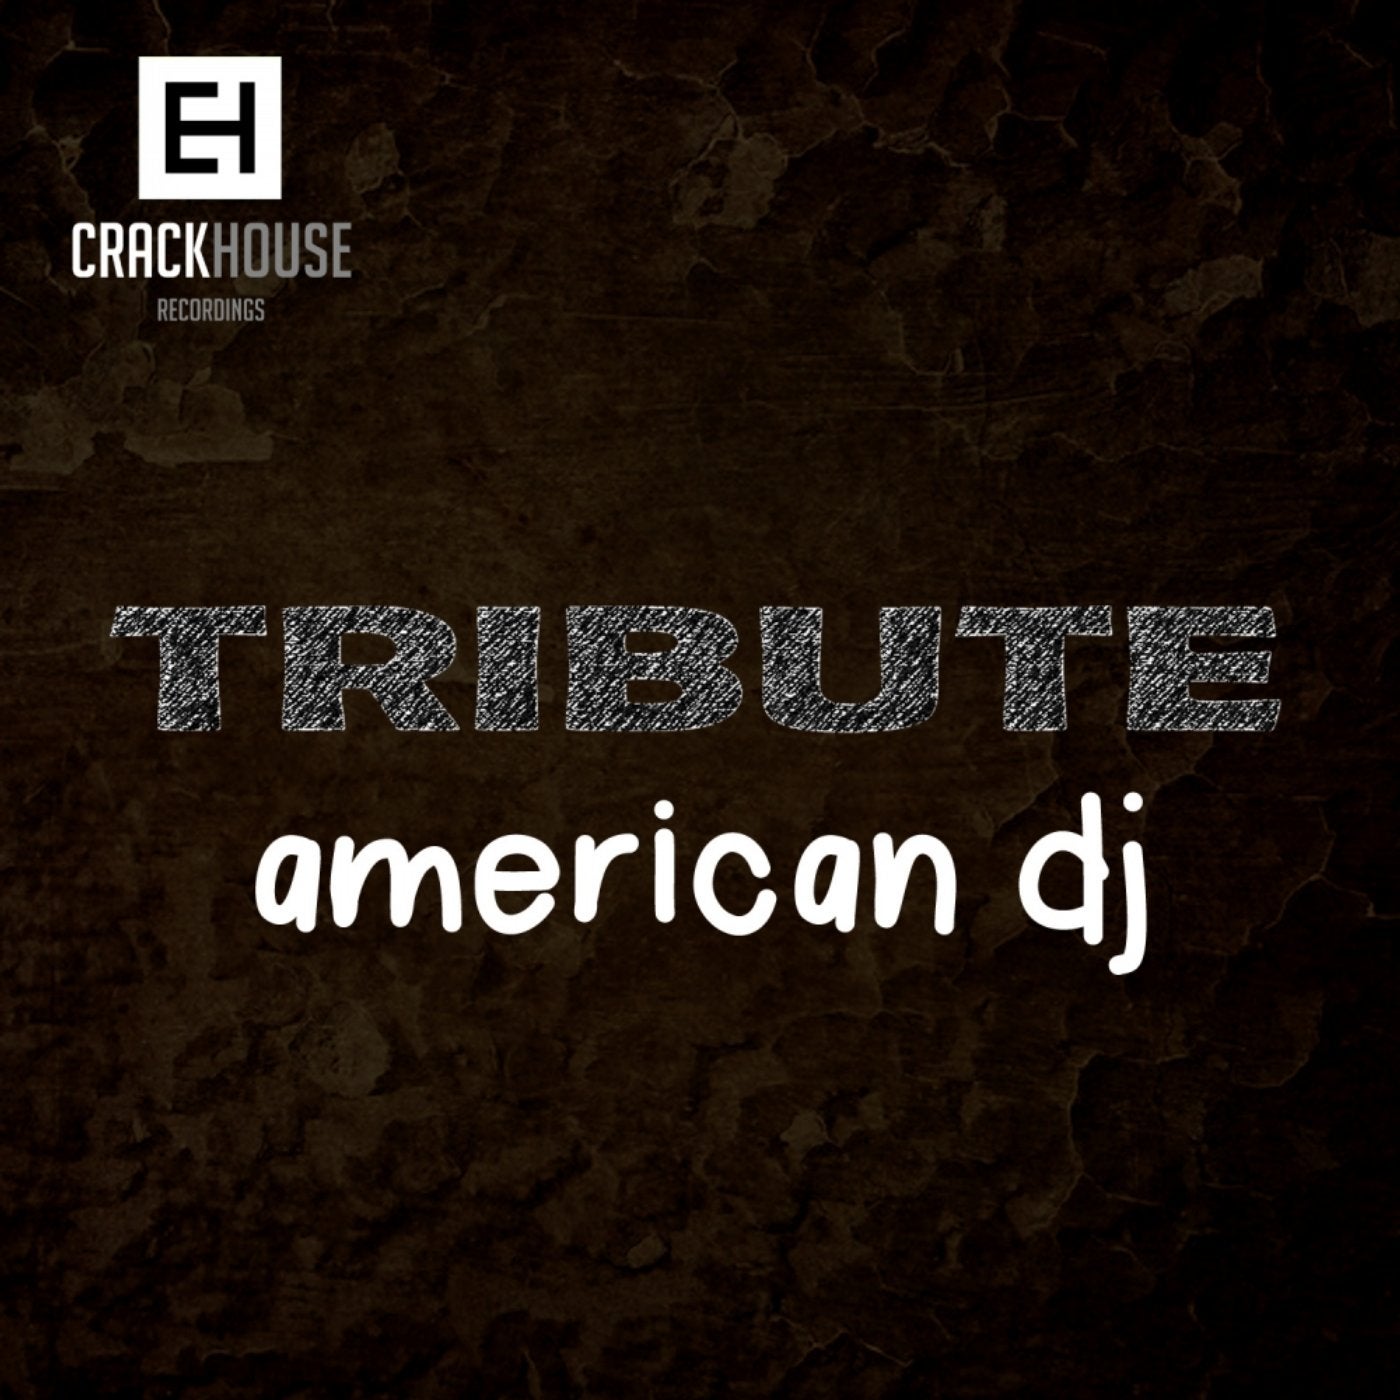 Tribute To American DJ